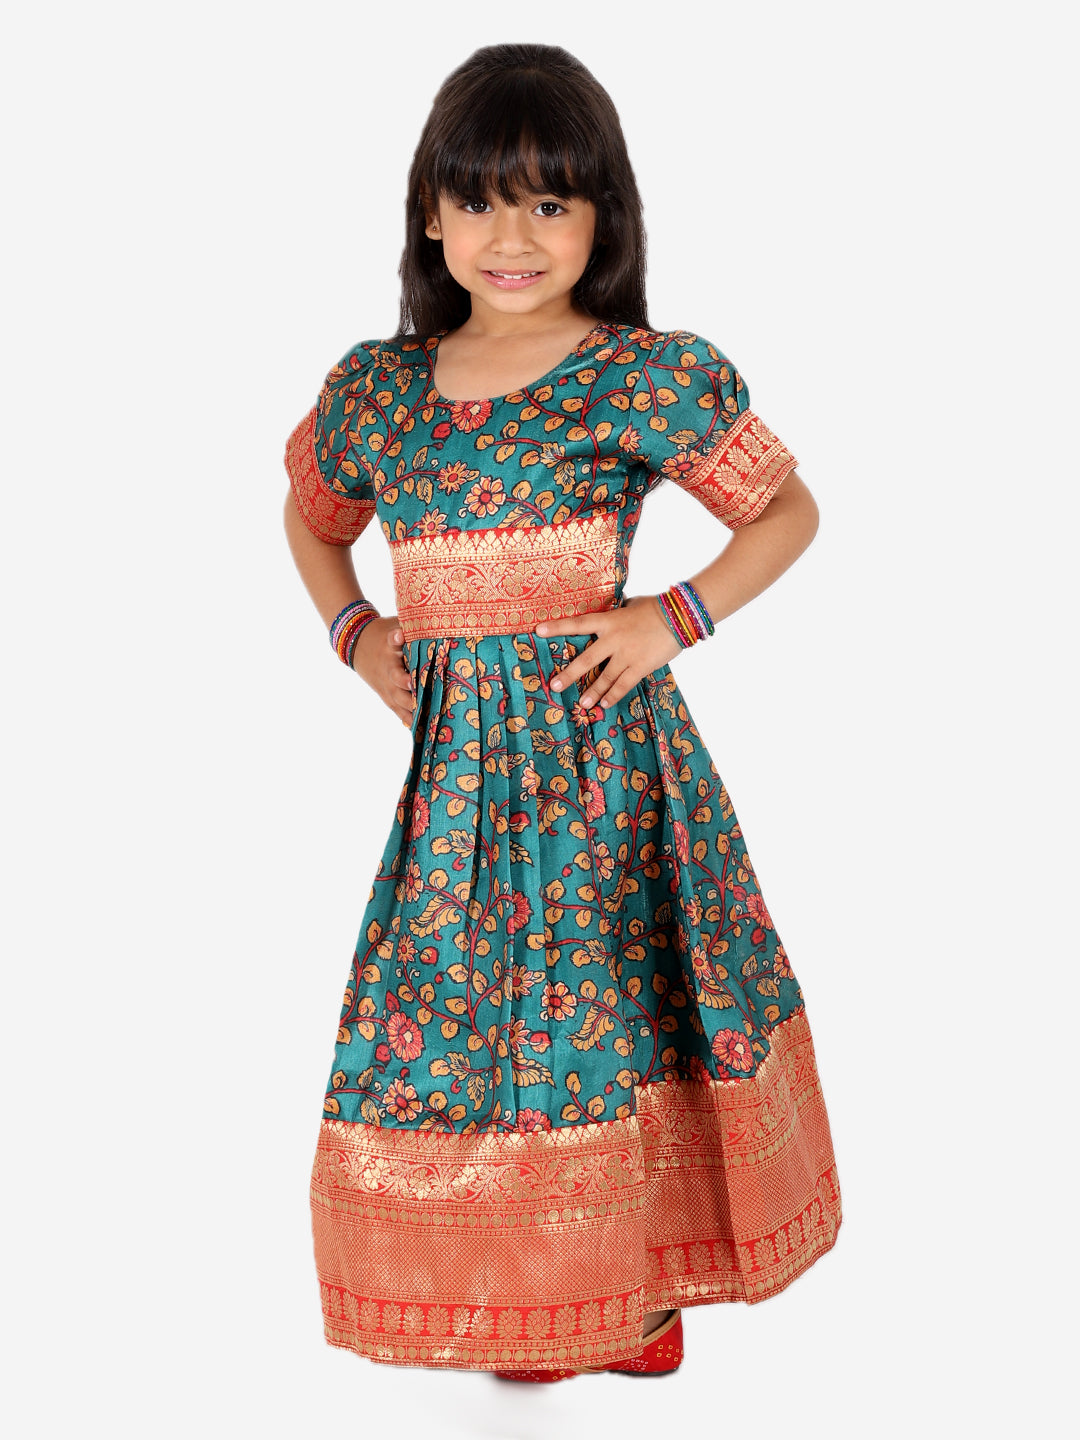 BownBee Kalamkari Print Party Dress Gown for Girls- Green